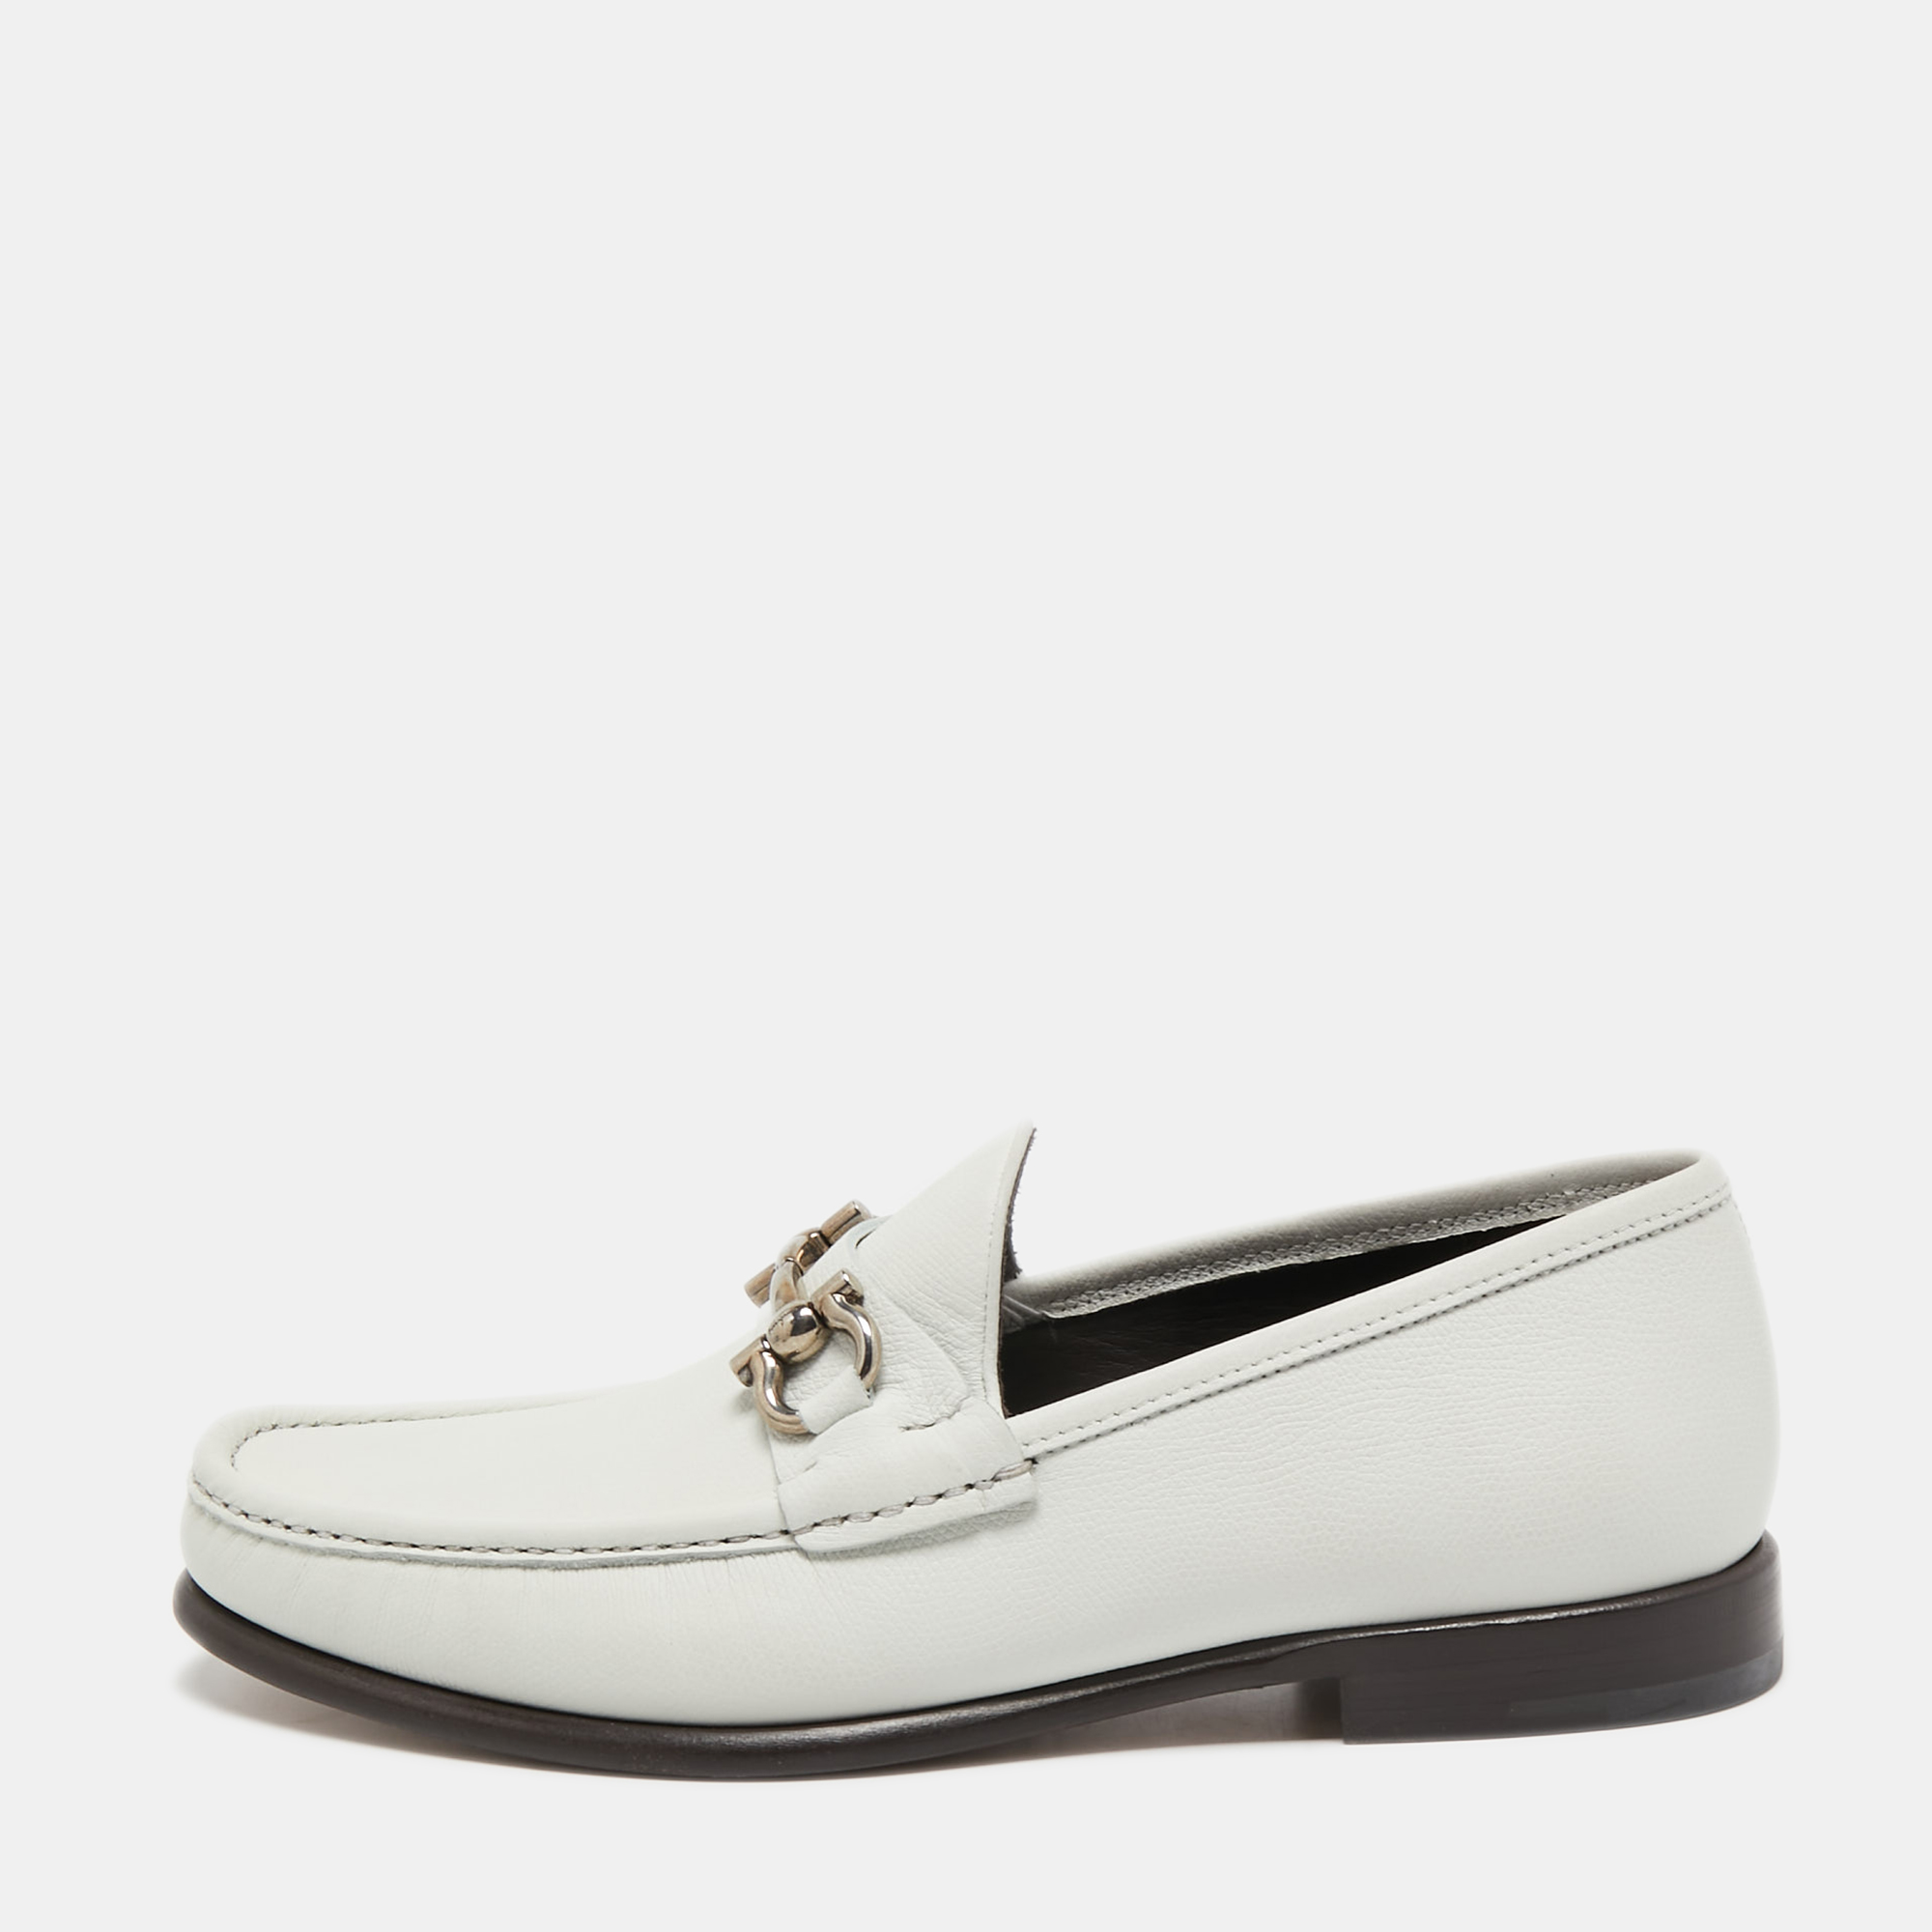 Pre-owned Salvatore Ferragamo White Leather Slip On Gancini Loafers Size 42.5